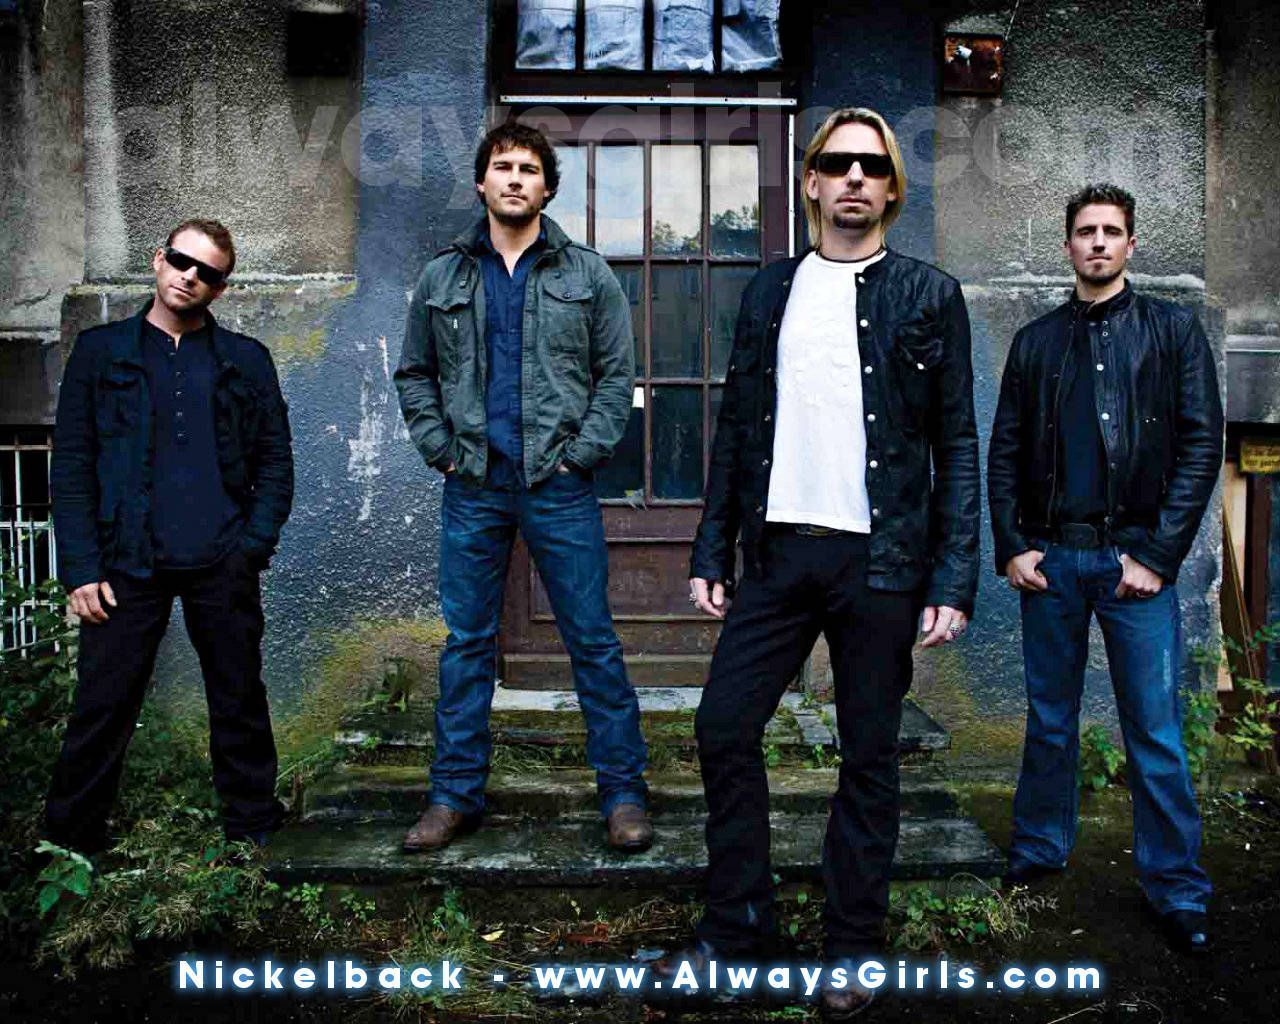 Nickelback - Nickelback Wallpaper (25843248) - Fanpop